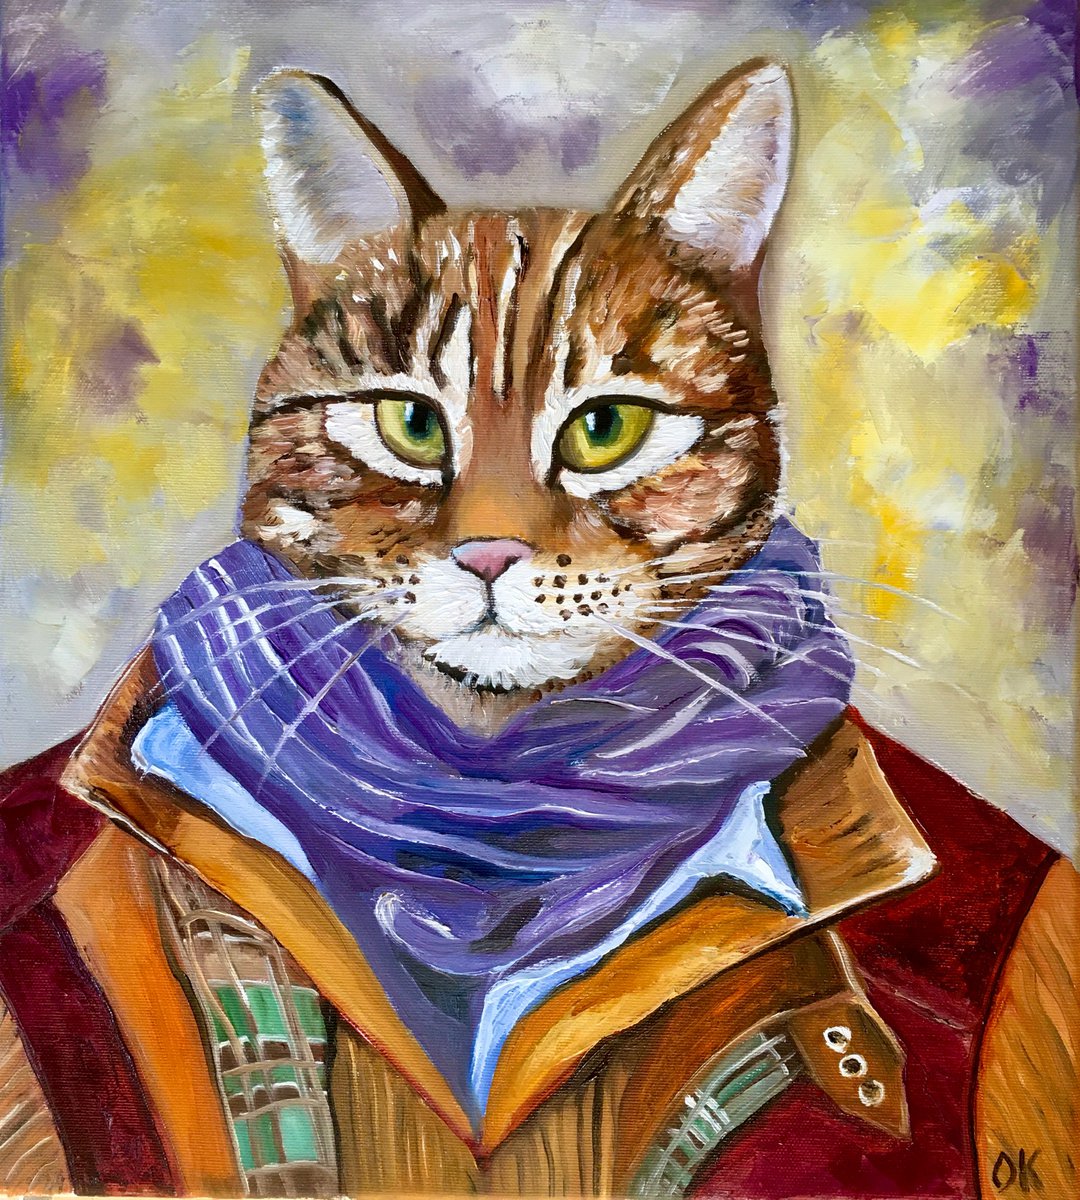 Troy The Cat adventurer. by Olga Koval